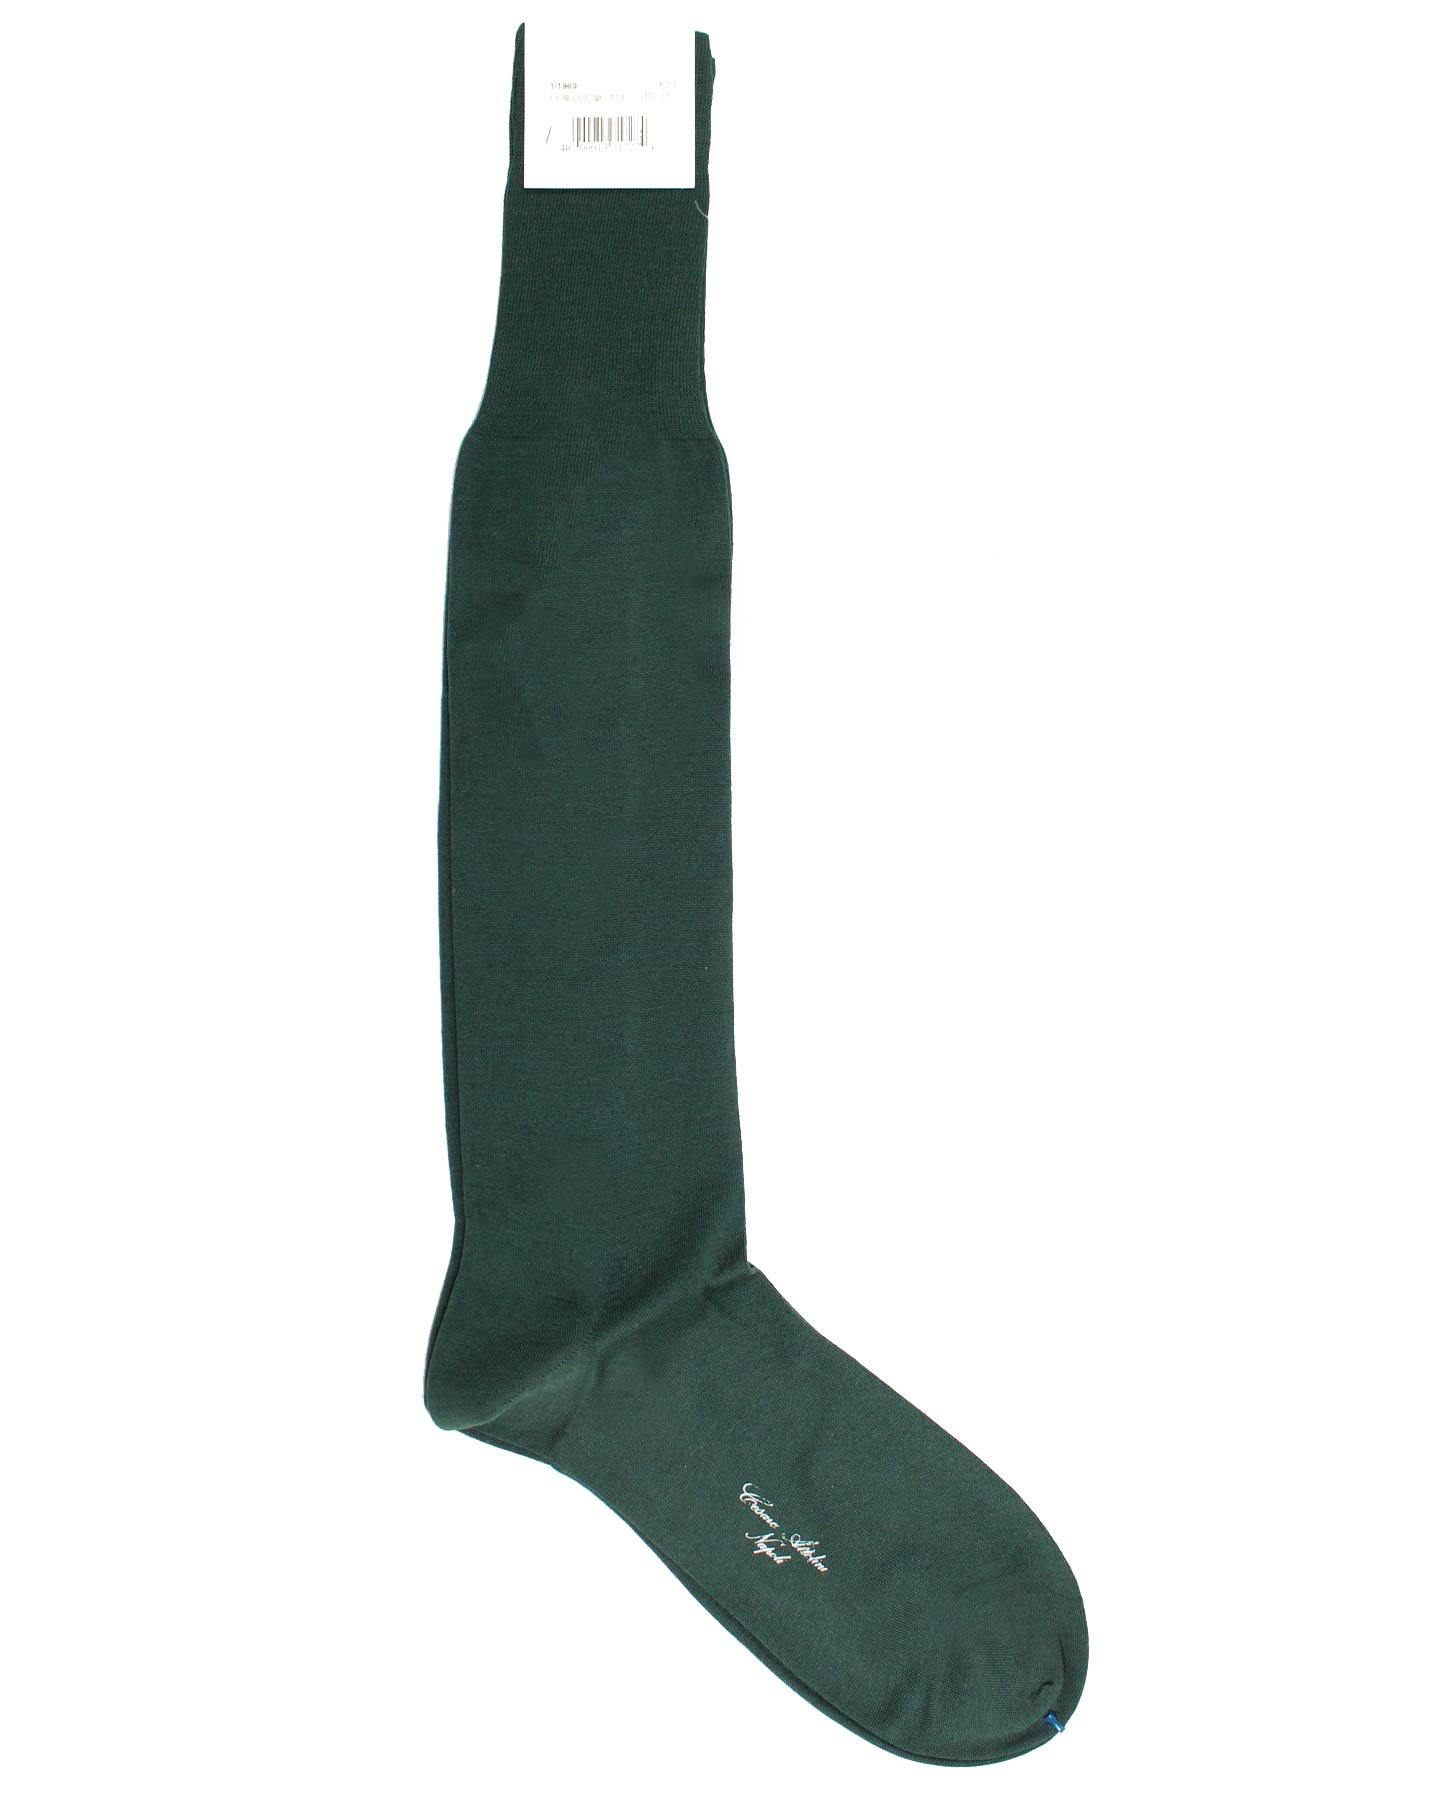 Cesare Attolini Socks Solid Dark Green